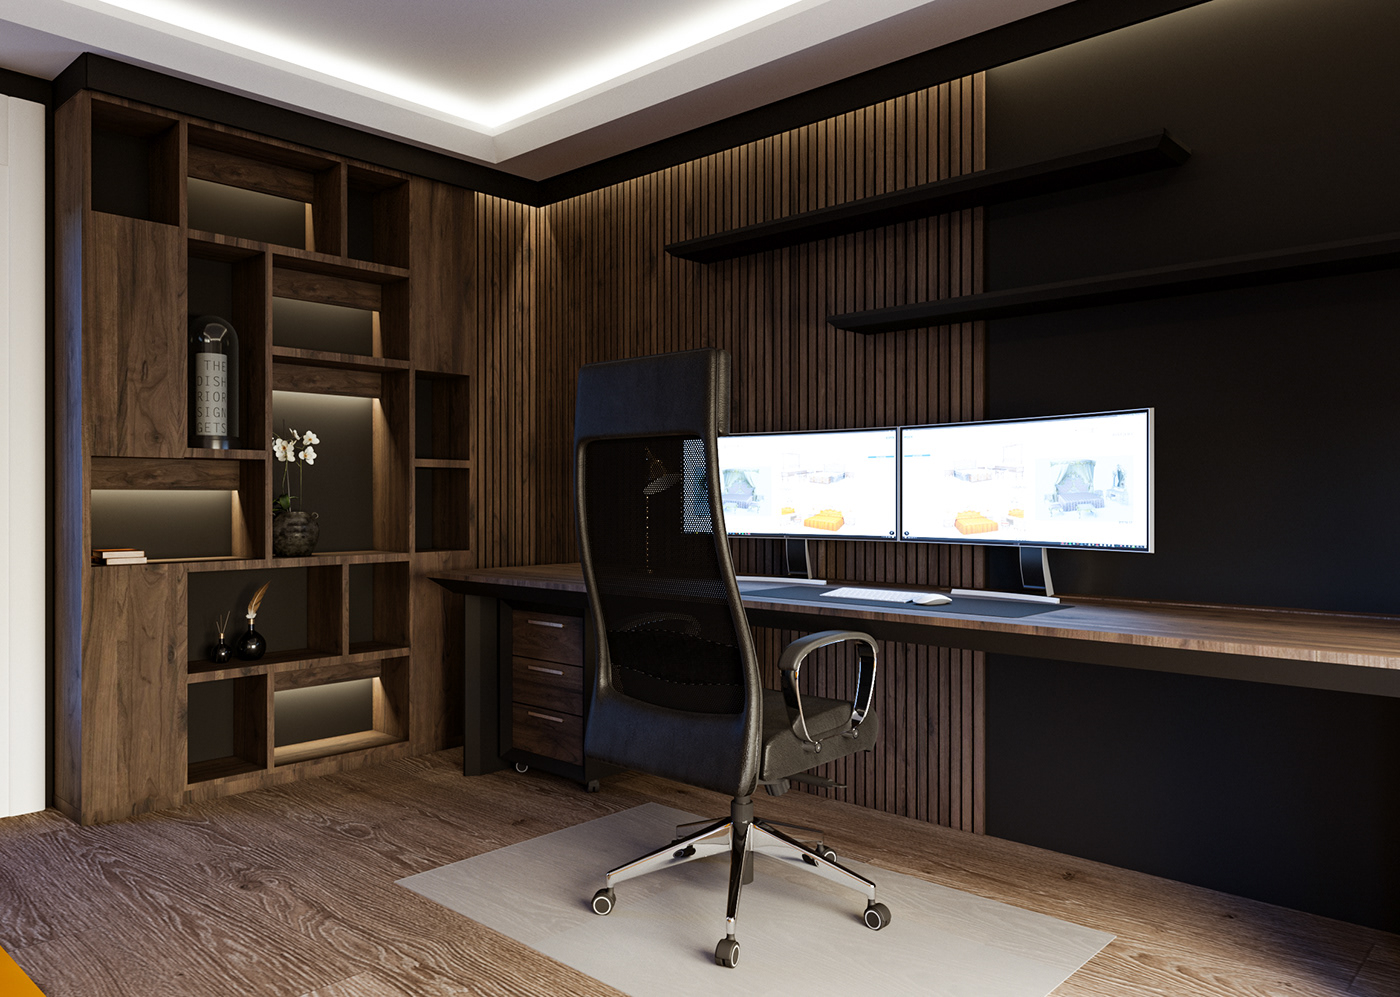 My Office Room (İnterior Design) on Behance
